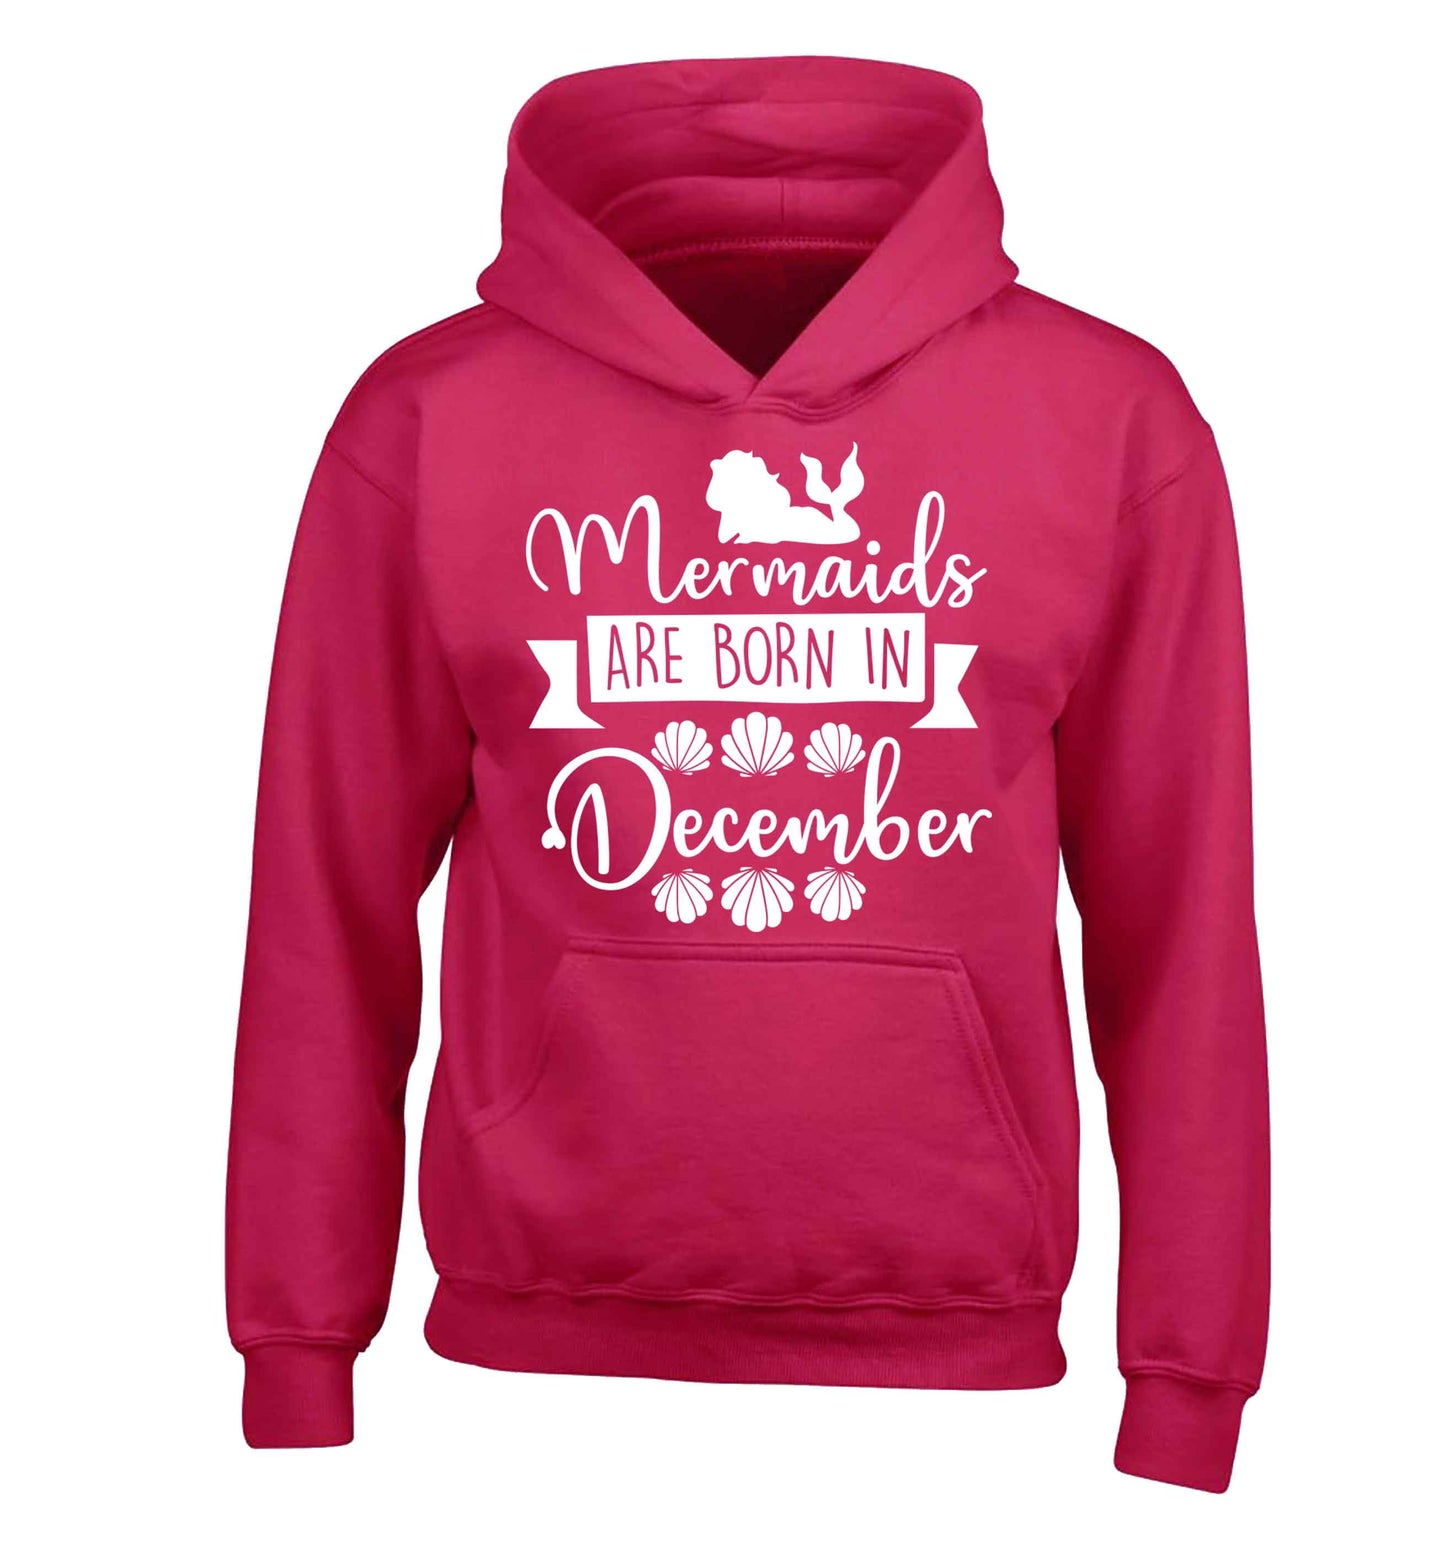 Mermaids are born in December children's pink hoodie 12-13 Years